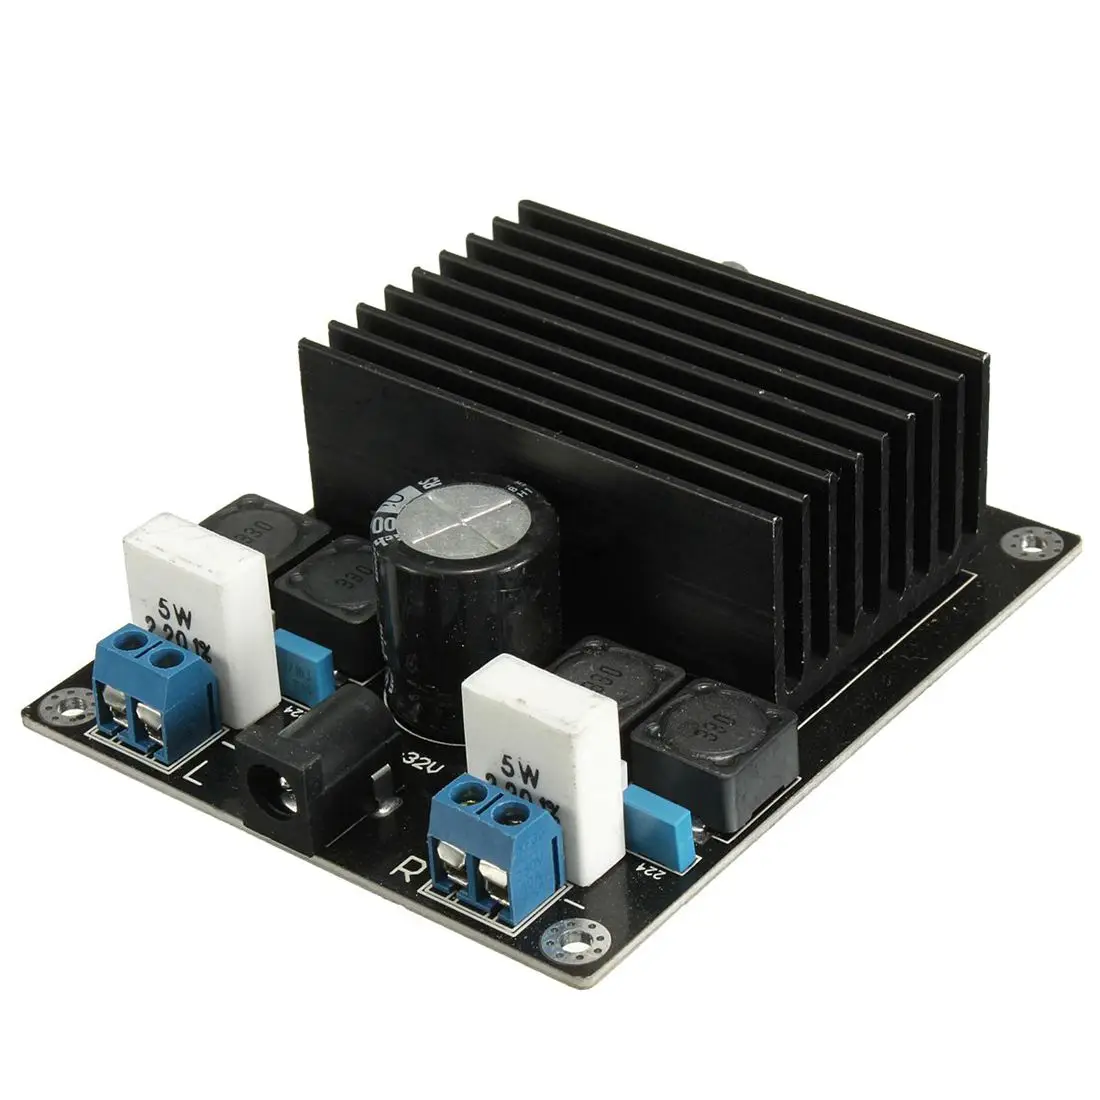 

100W + 100W Amplifier TDA7498 Class D Amp Subwoofer Assembled Board Module DIY